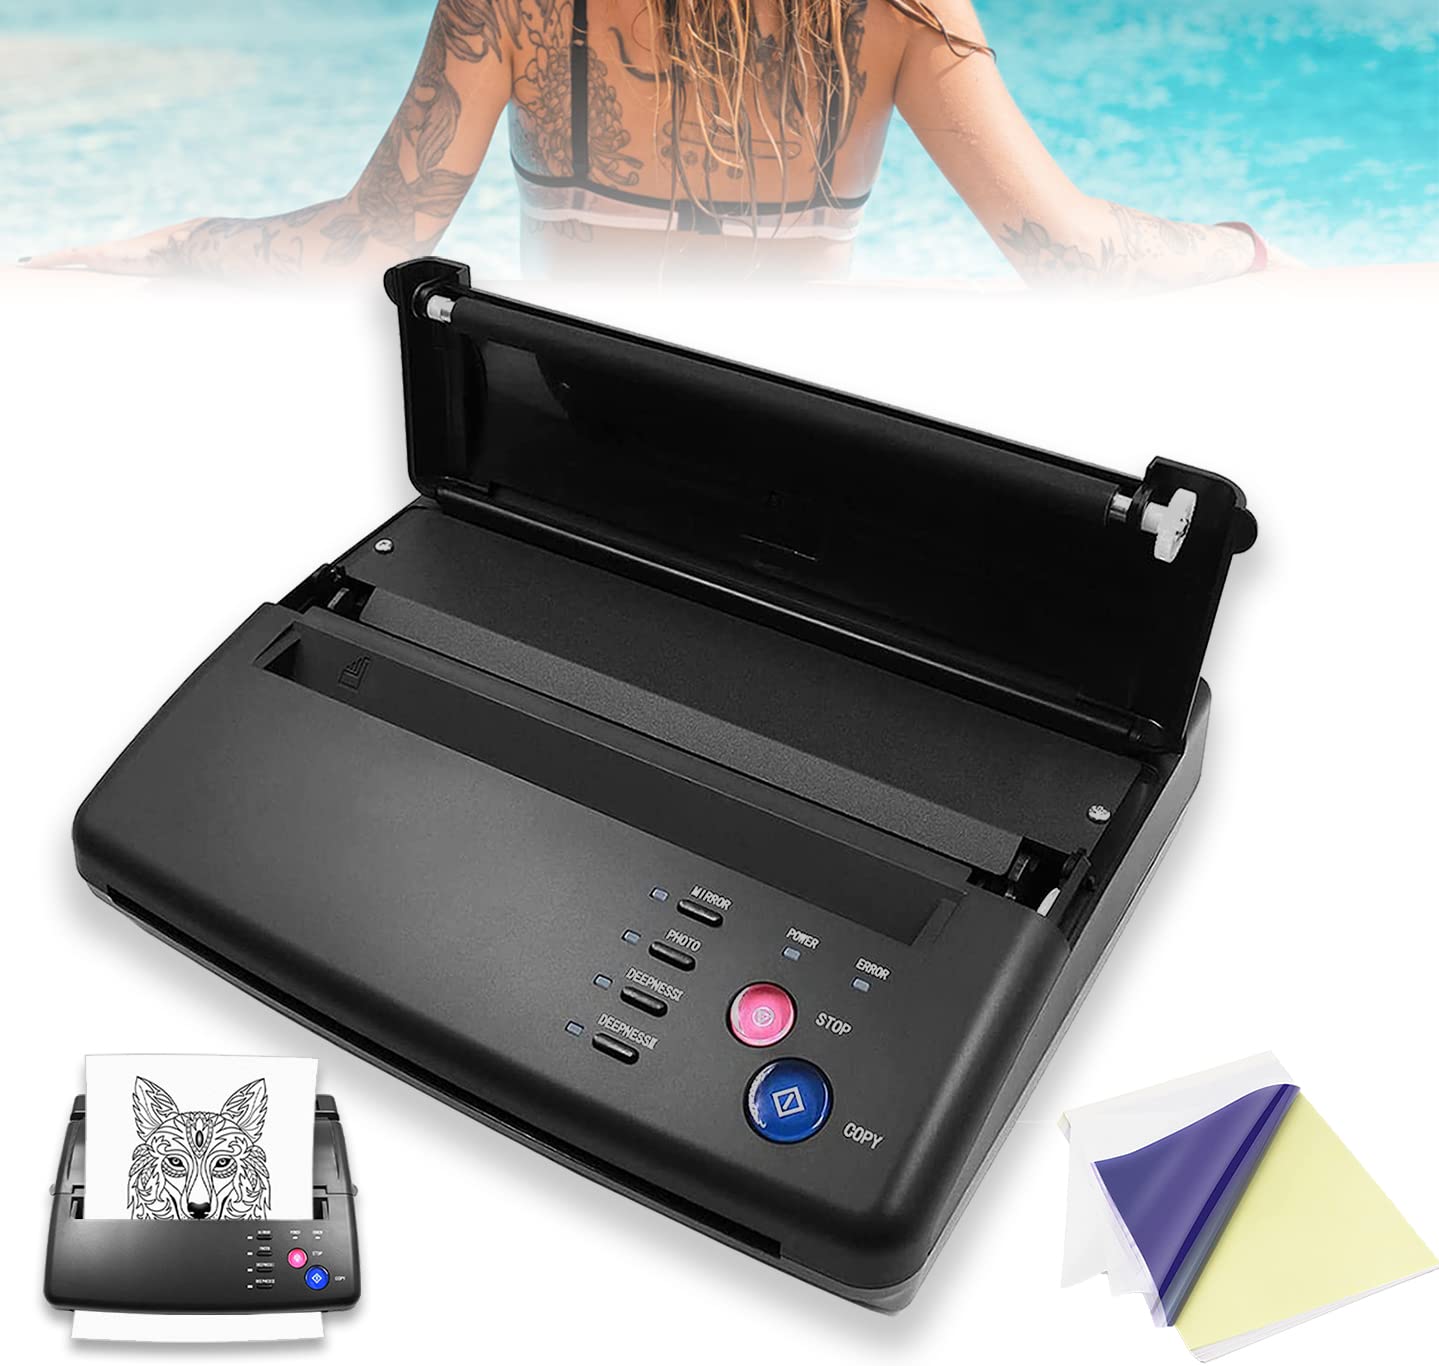 Atelics Tattoo Transfer Stencil Machine Thermal Copier Printer with 20 Pcs  Transfer Paper Tattoo Stencil Printer Tattoo for Temporary and Permanent  Tattoos Black Update Version